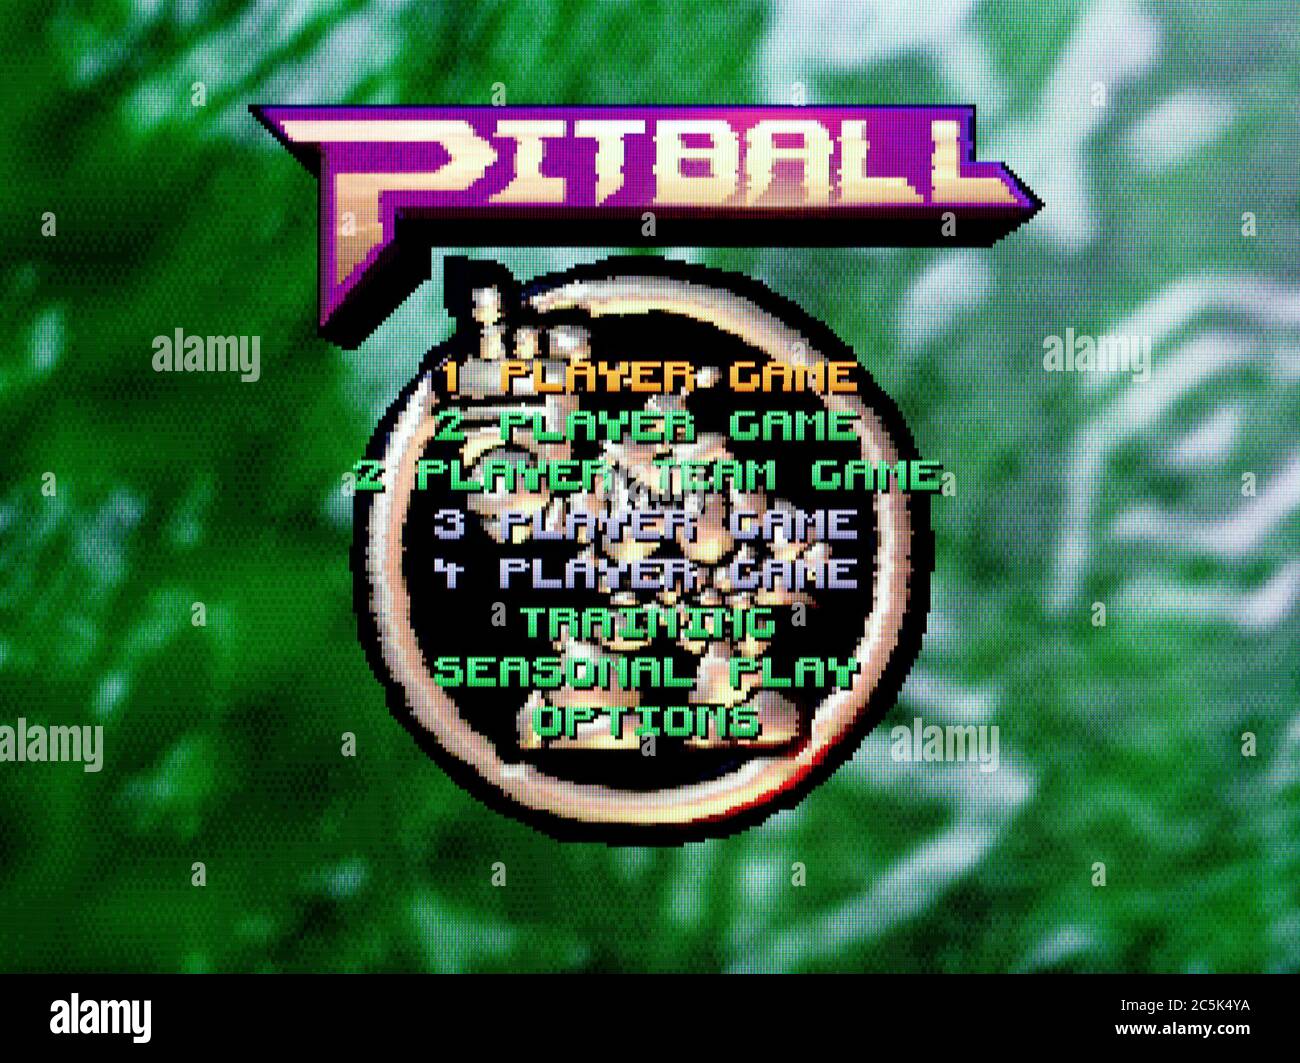 Pitball - Sony PlayStation 1 PS1 PSX - solo para uso editorial Foto de stock